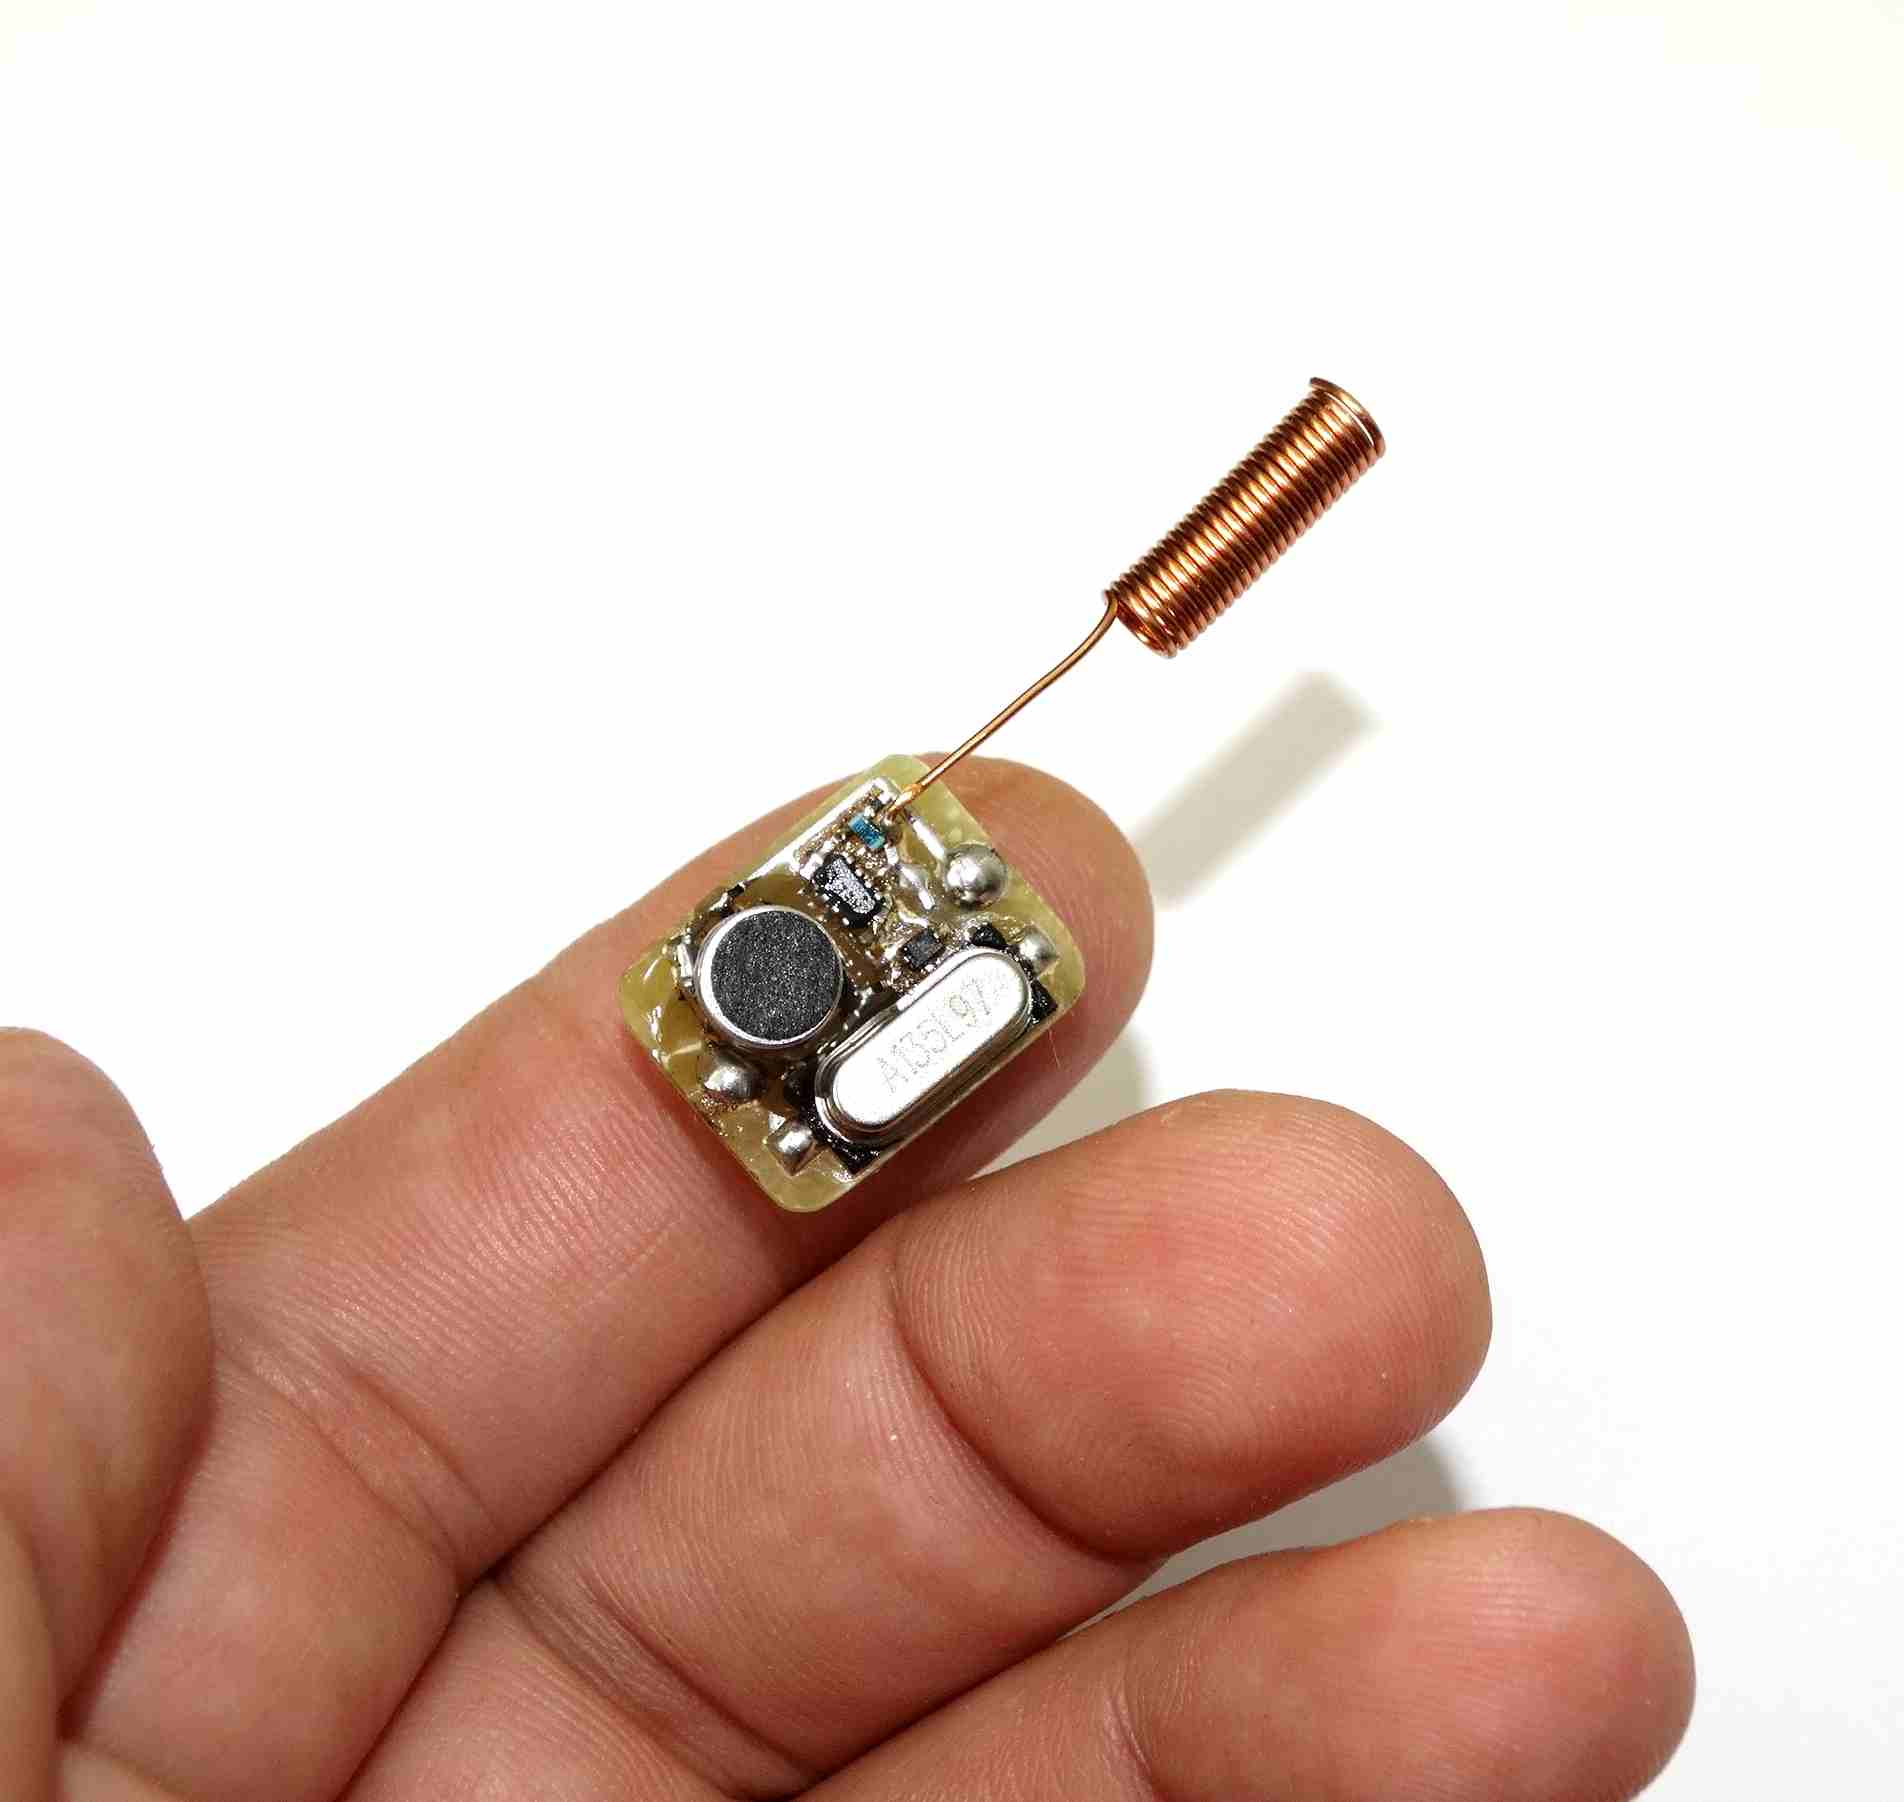 ultra miniature spy transmitter